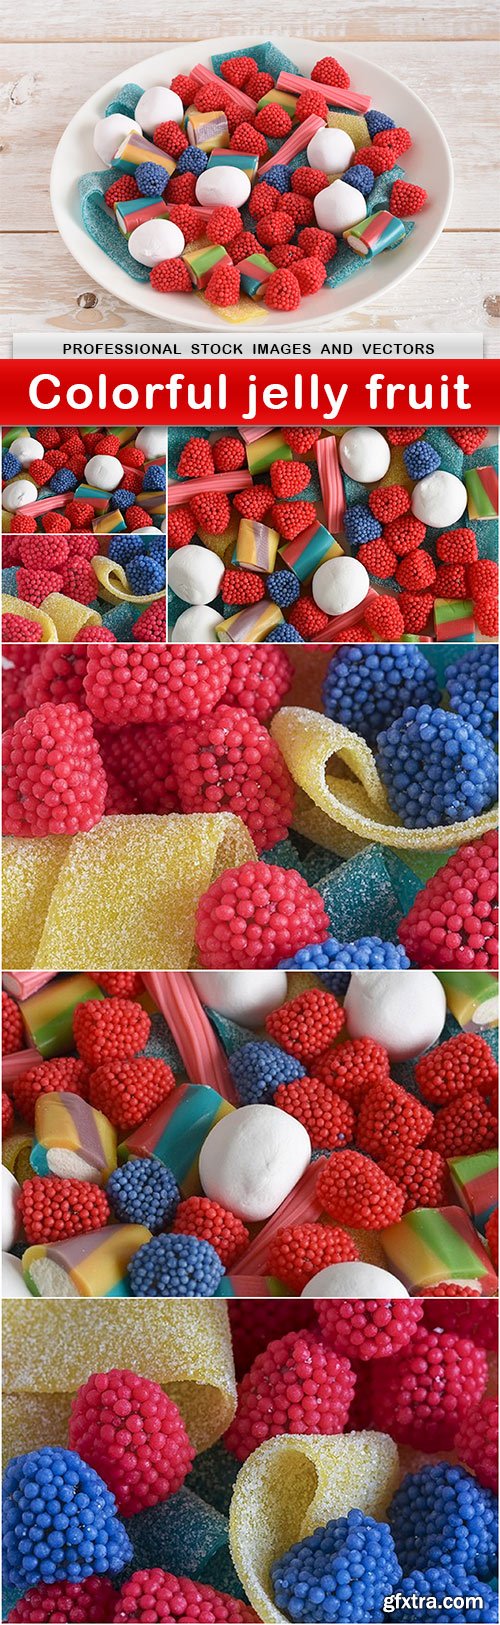 Colorful jelly fruit - 7 UHQ JPEG